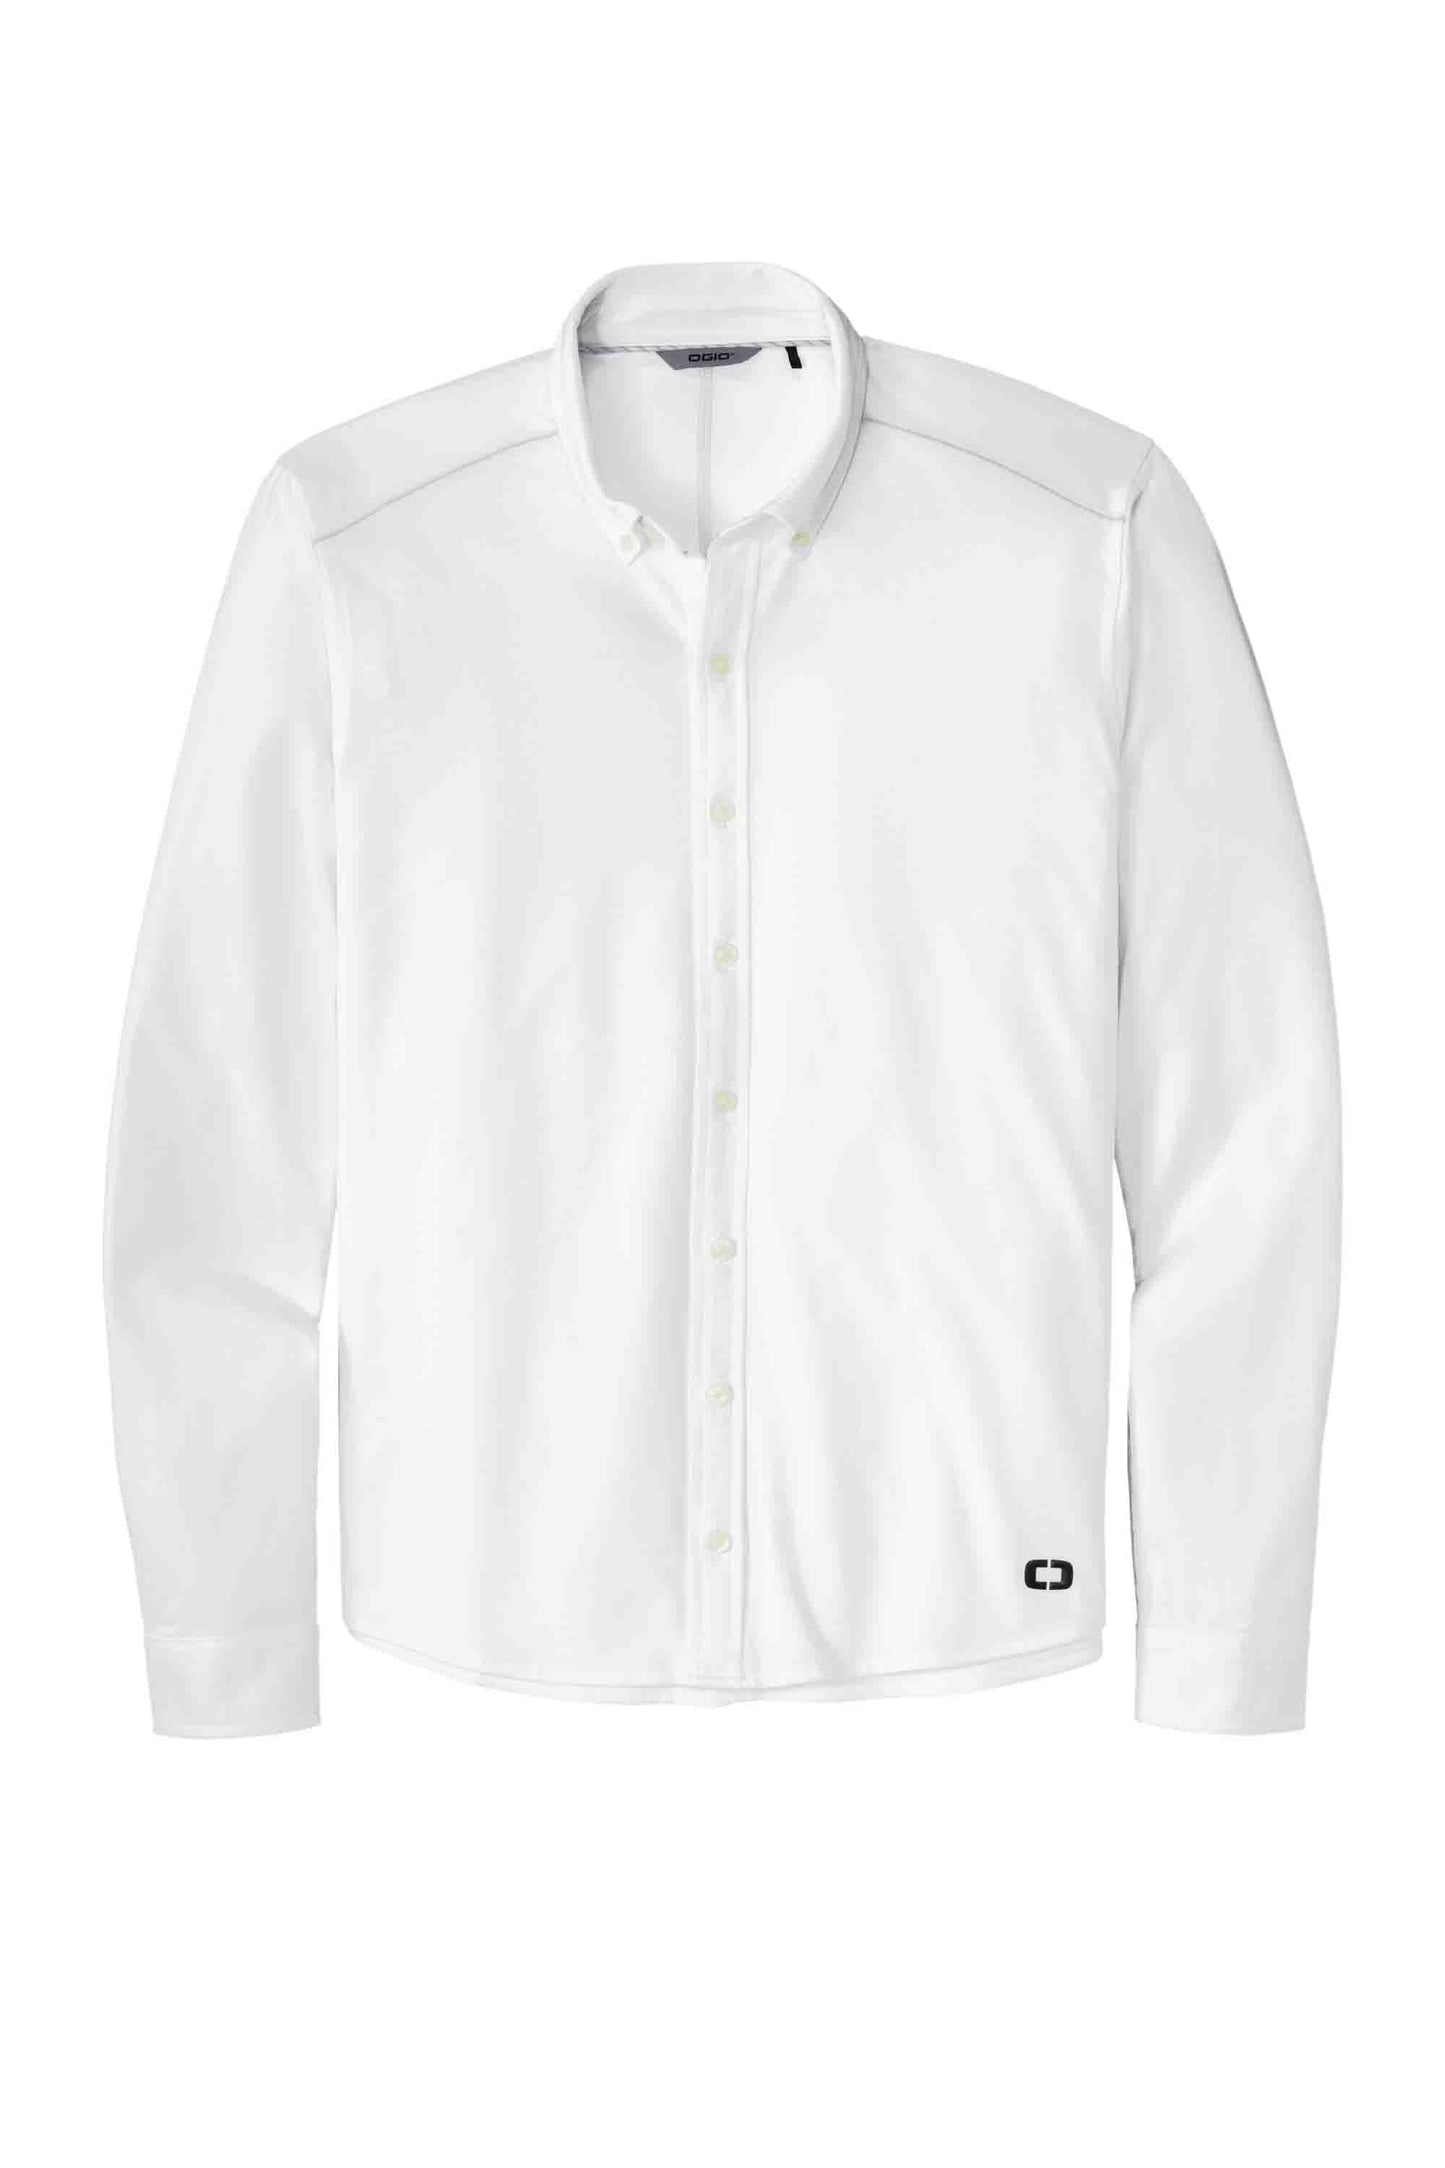 OGIO Stretch Button-Down Long Sleeve Shirt